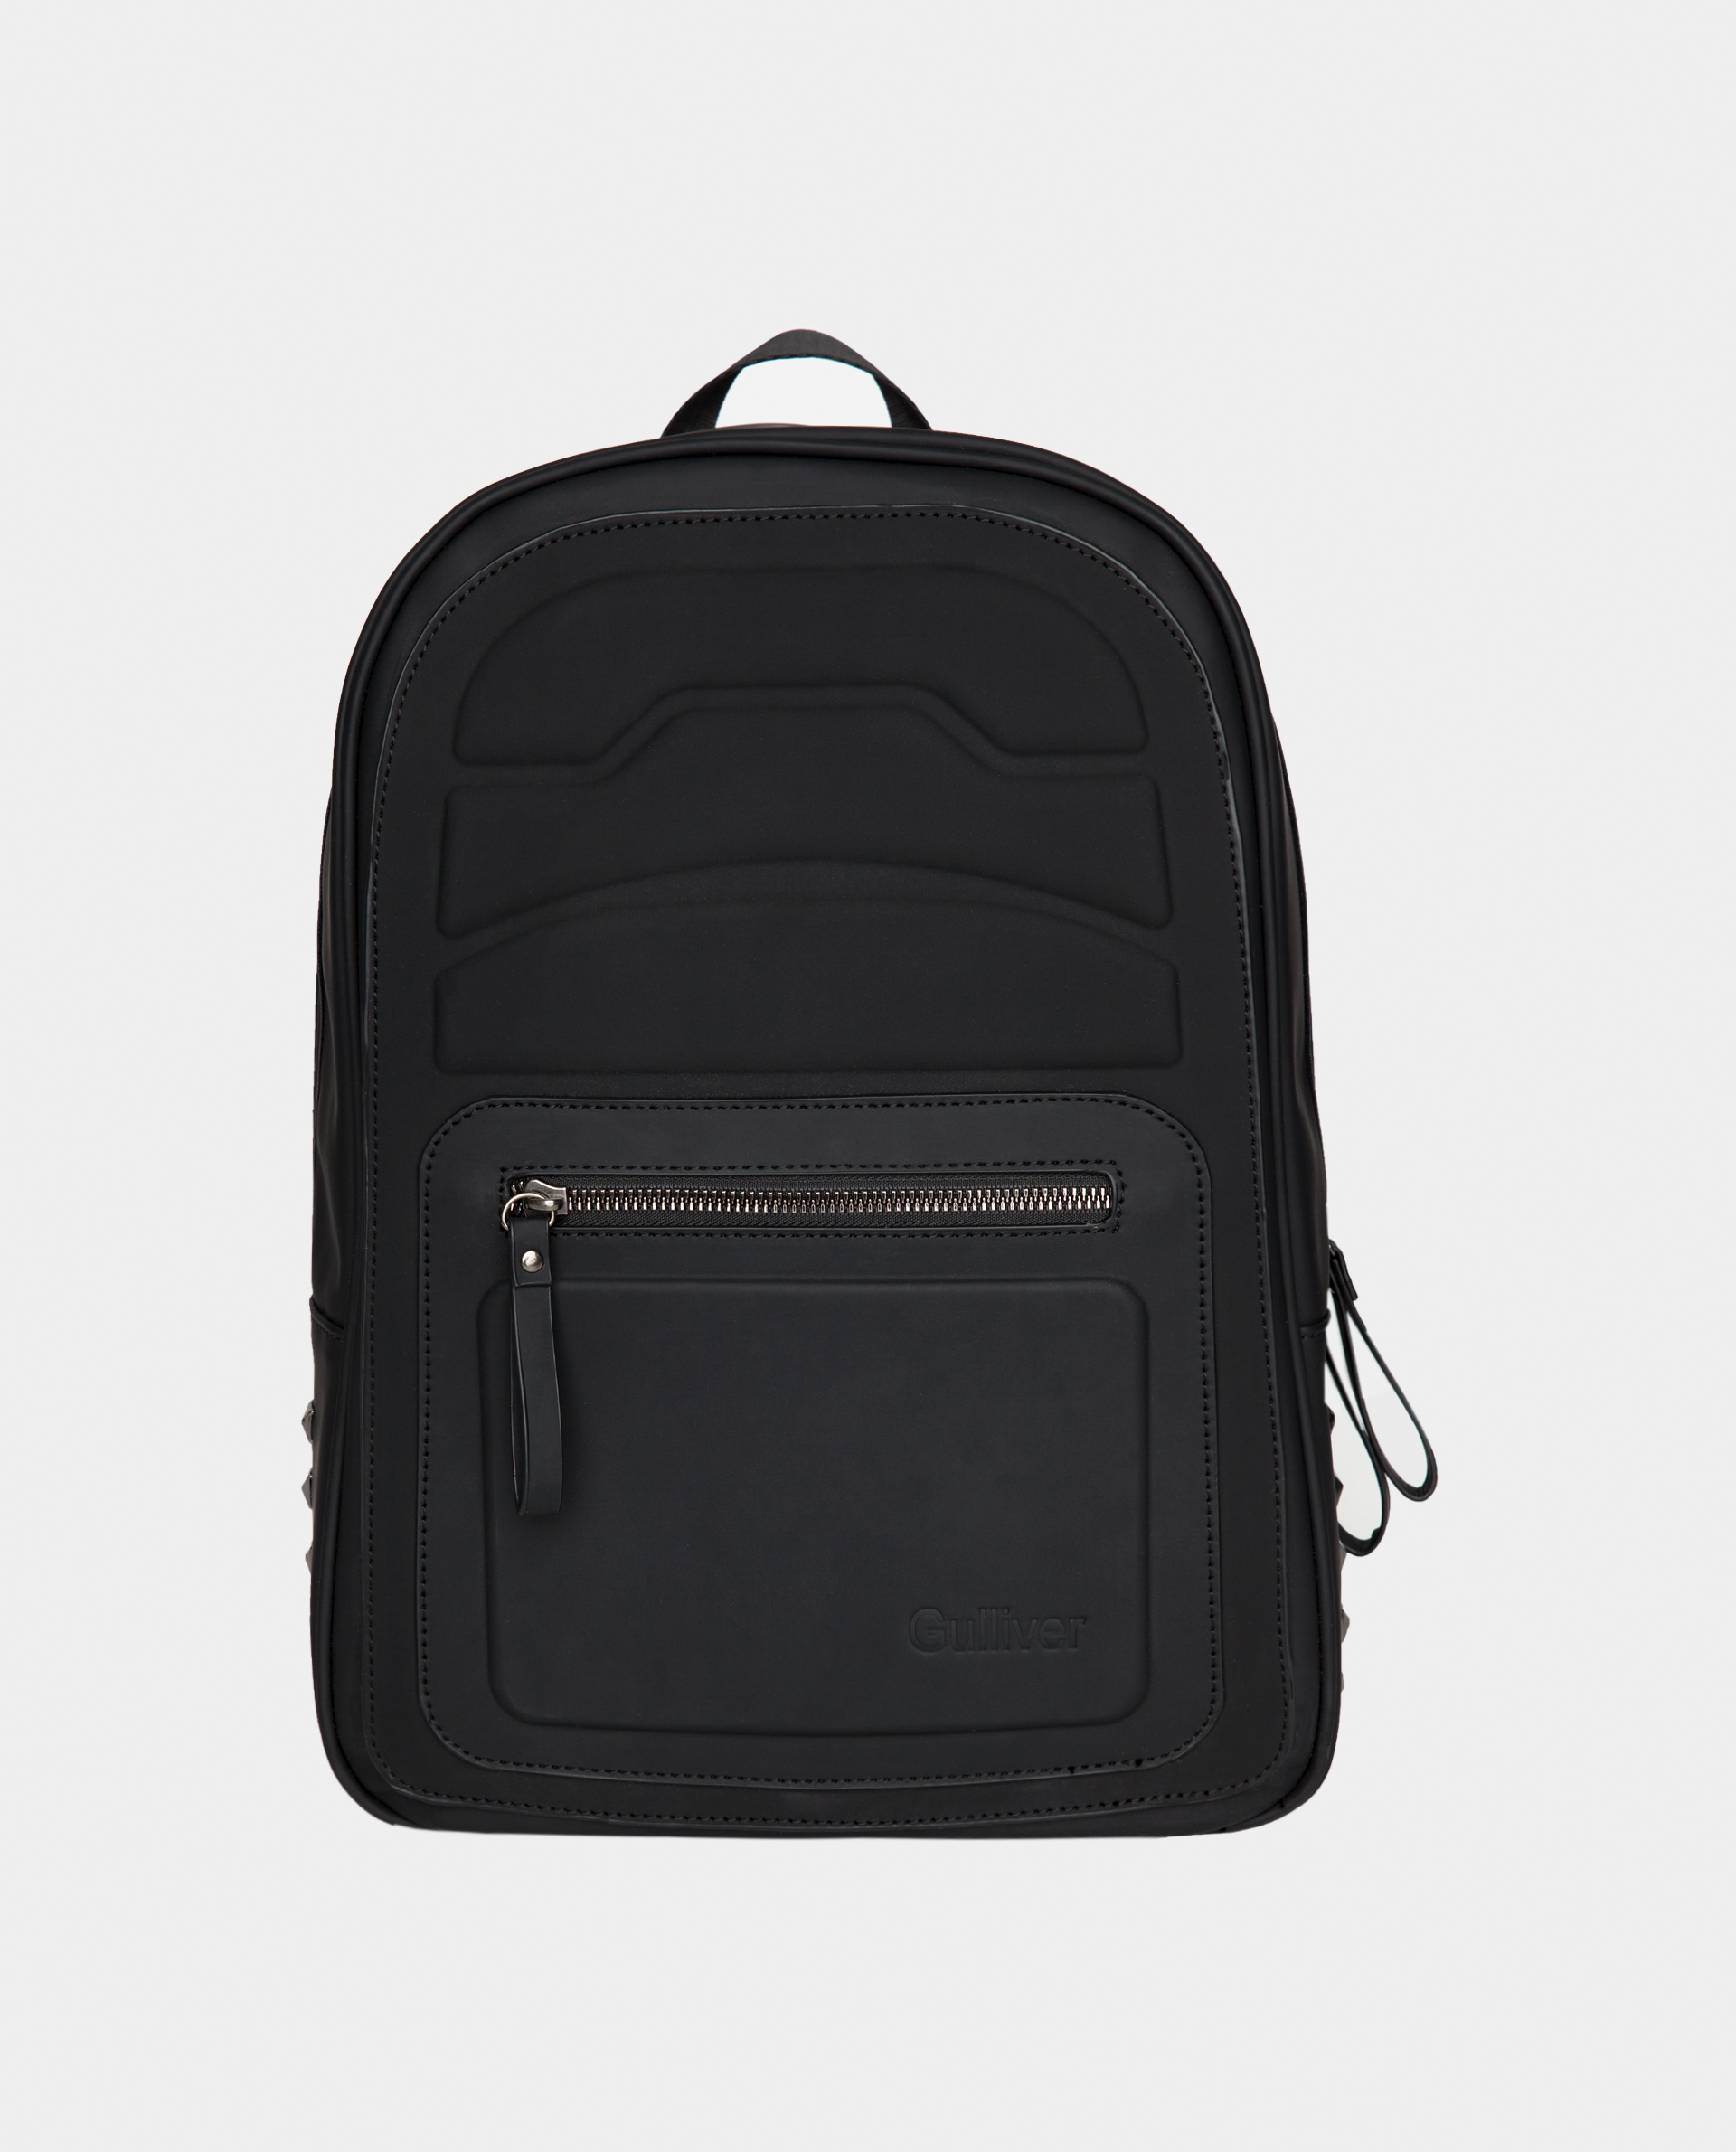 Черный рюкзак для мальчика Gulliver 220GSBA2105, размер Без размера - фото 1